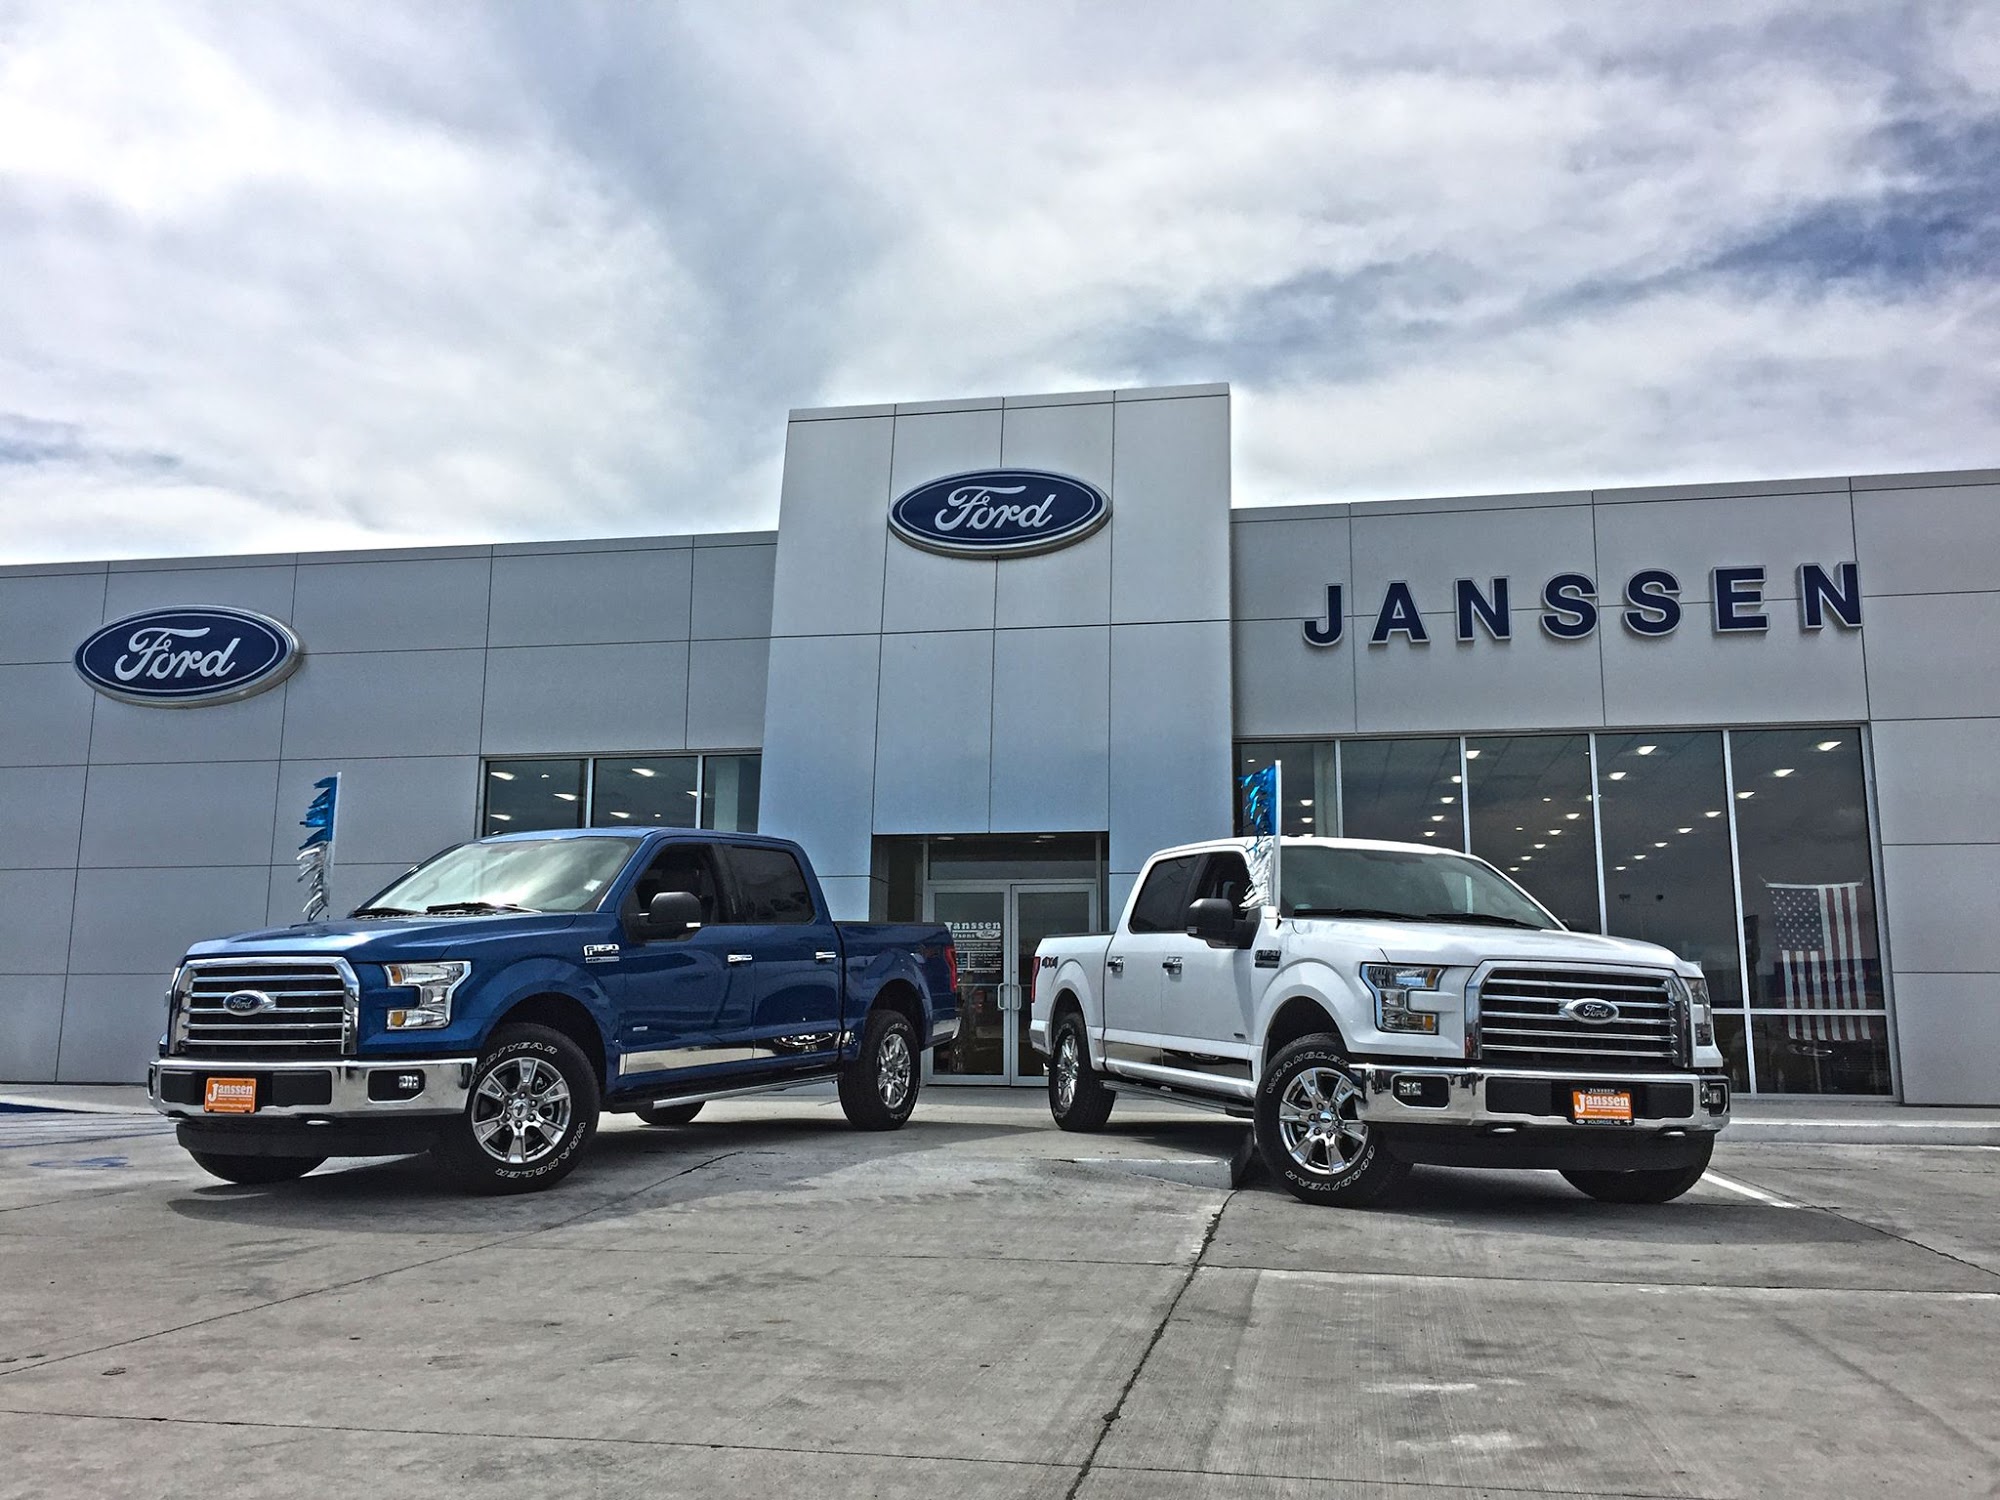 Janssen & Sons Ford